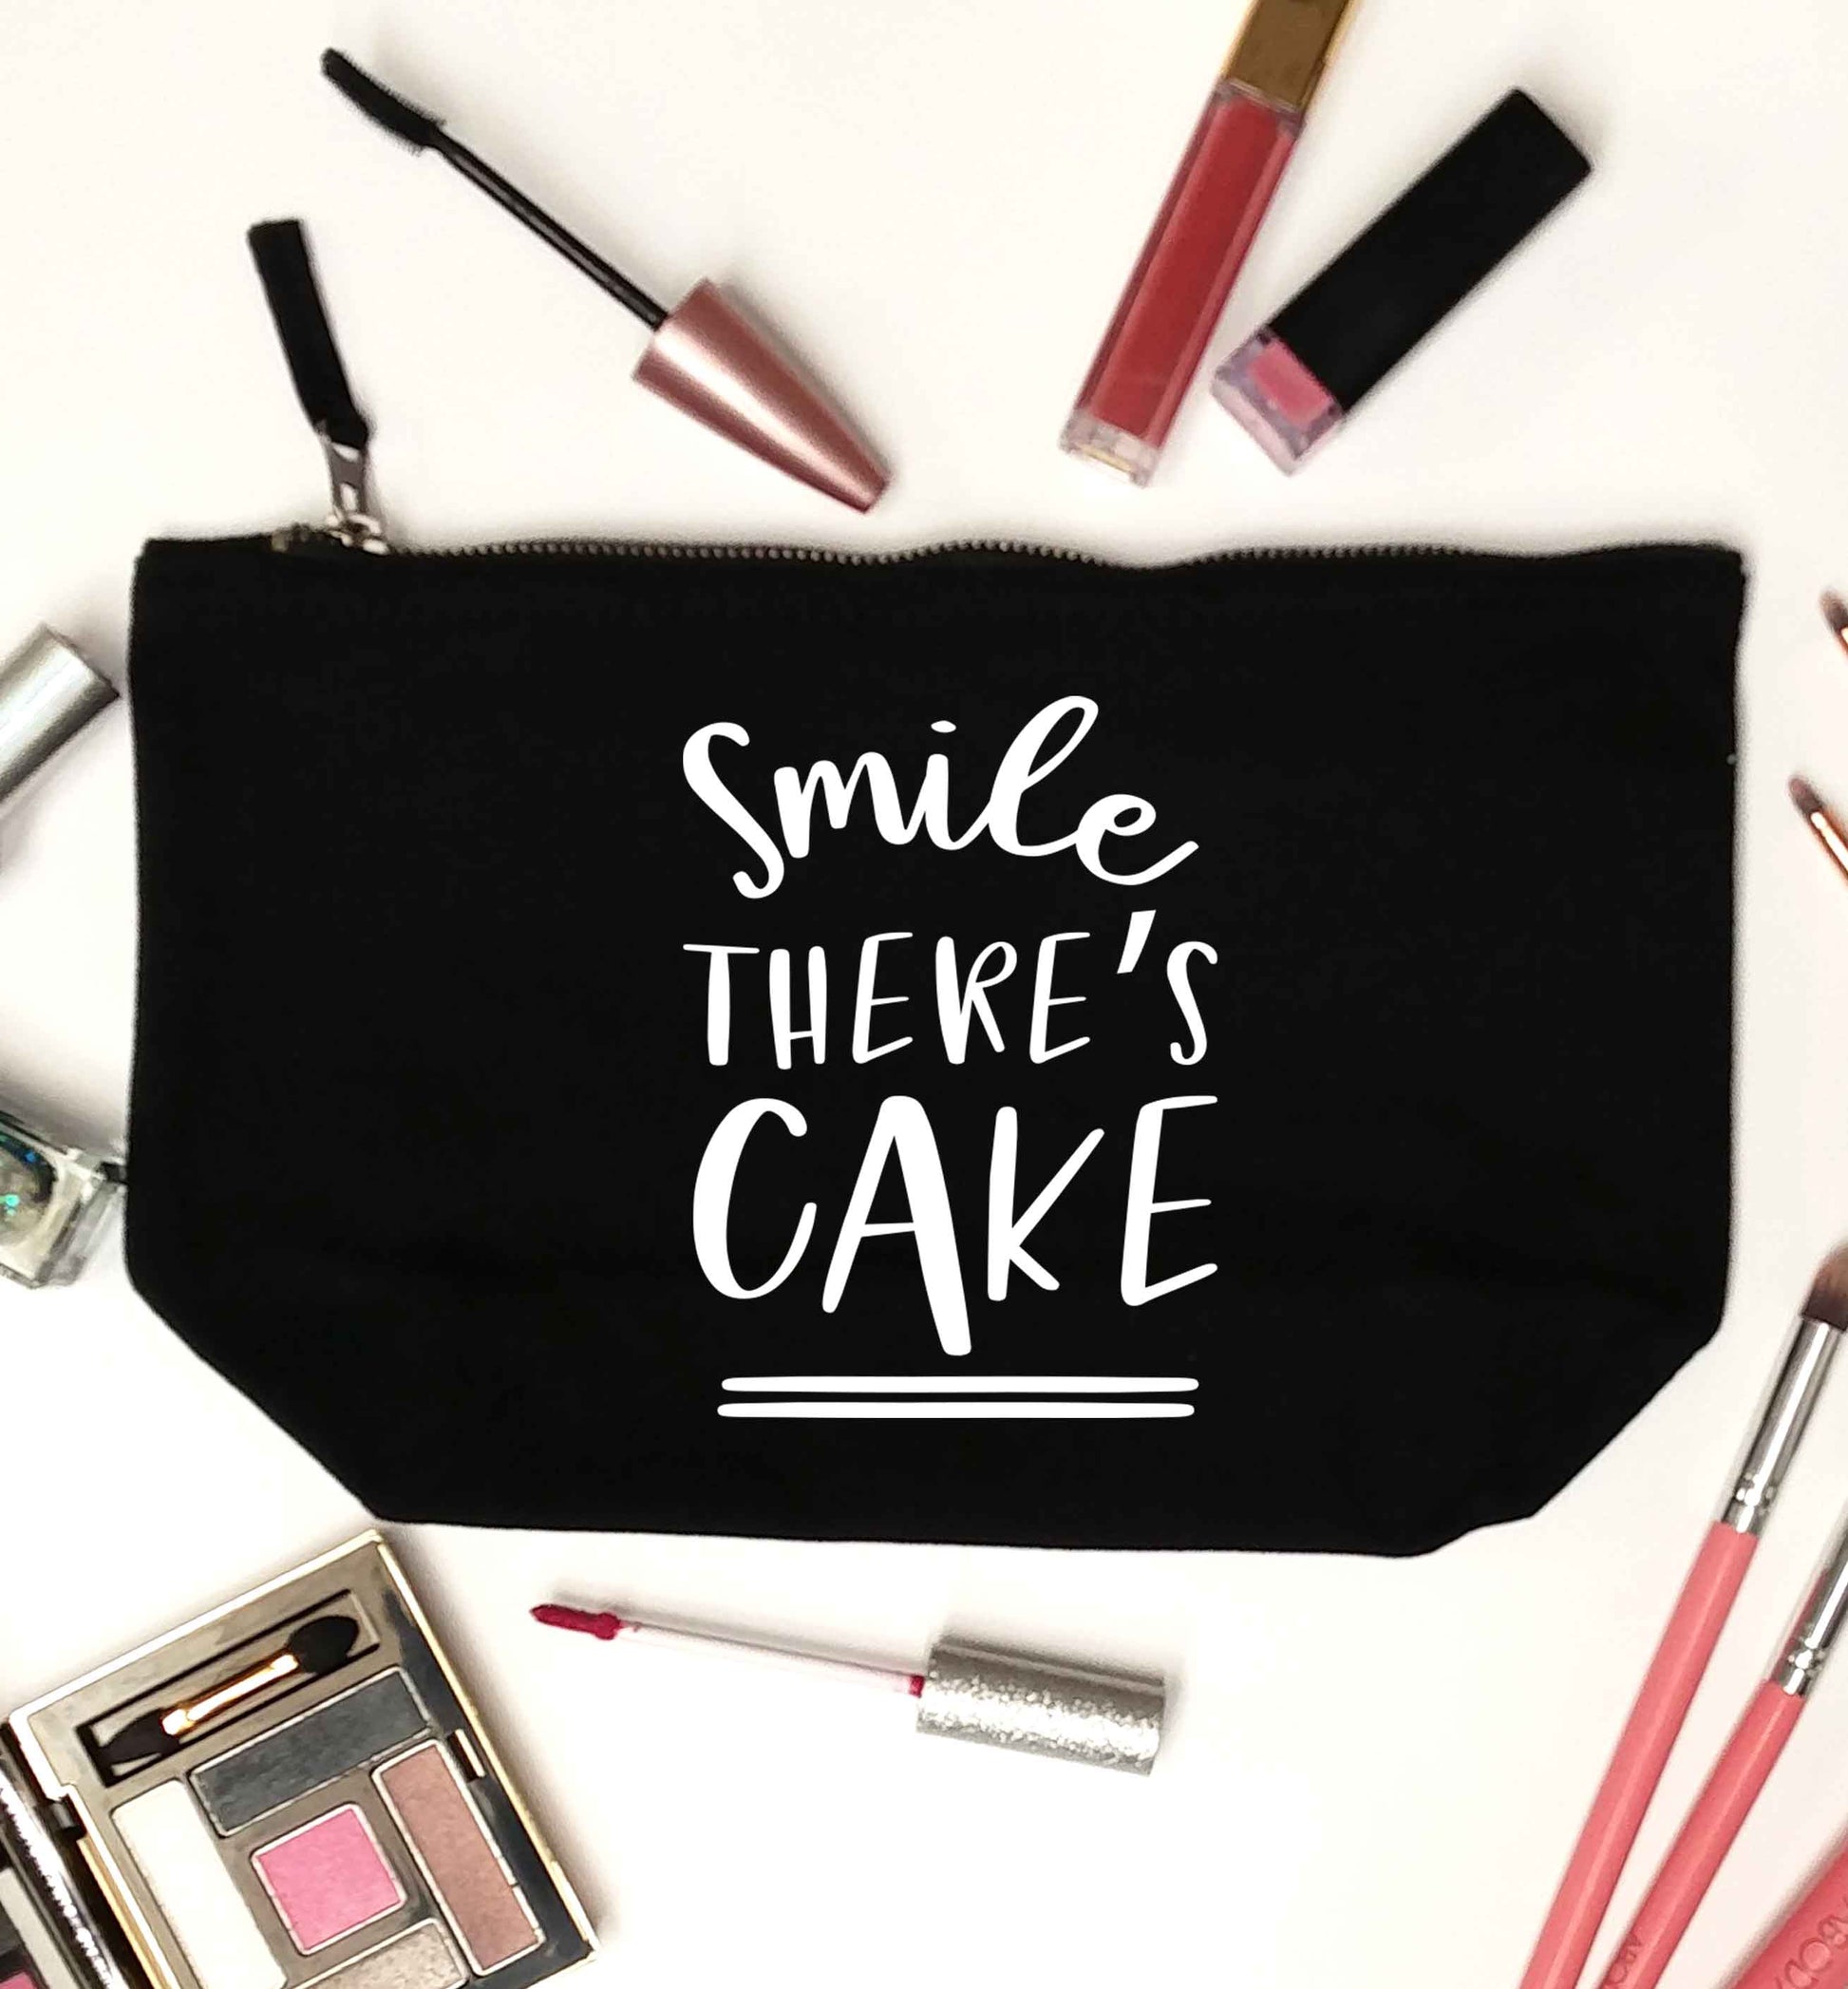 Smile there's cake black makeup bag